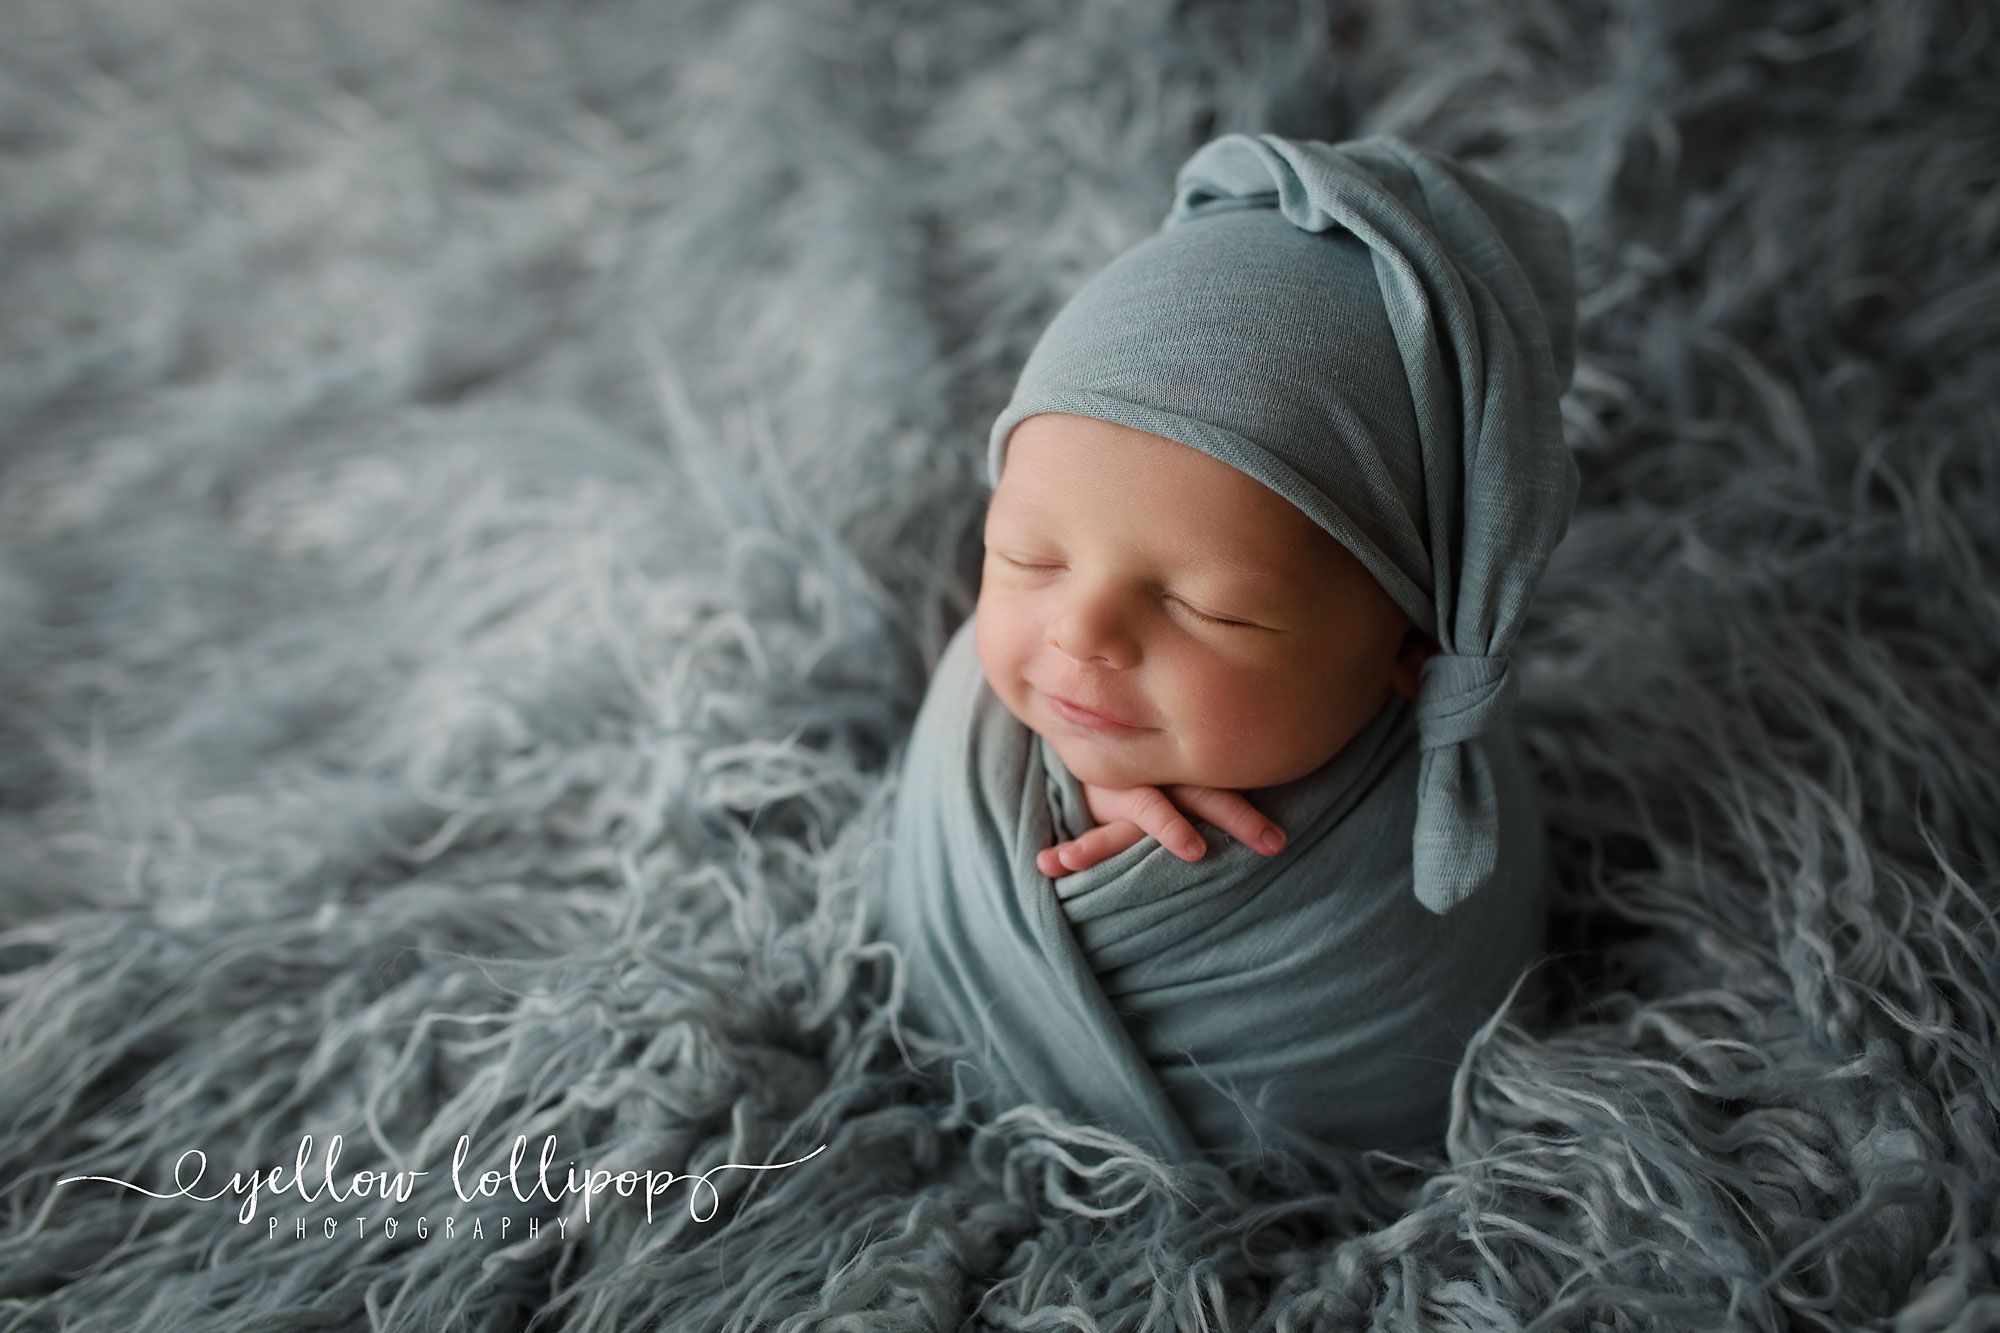 boy newborn photo session ideas 